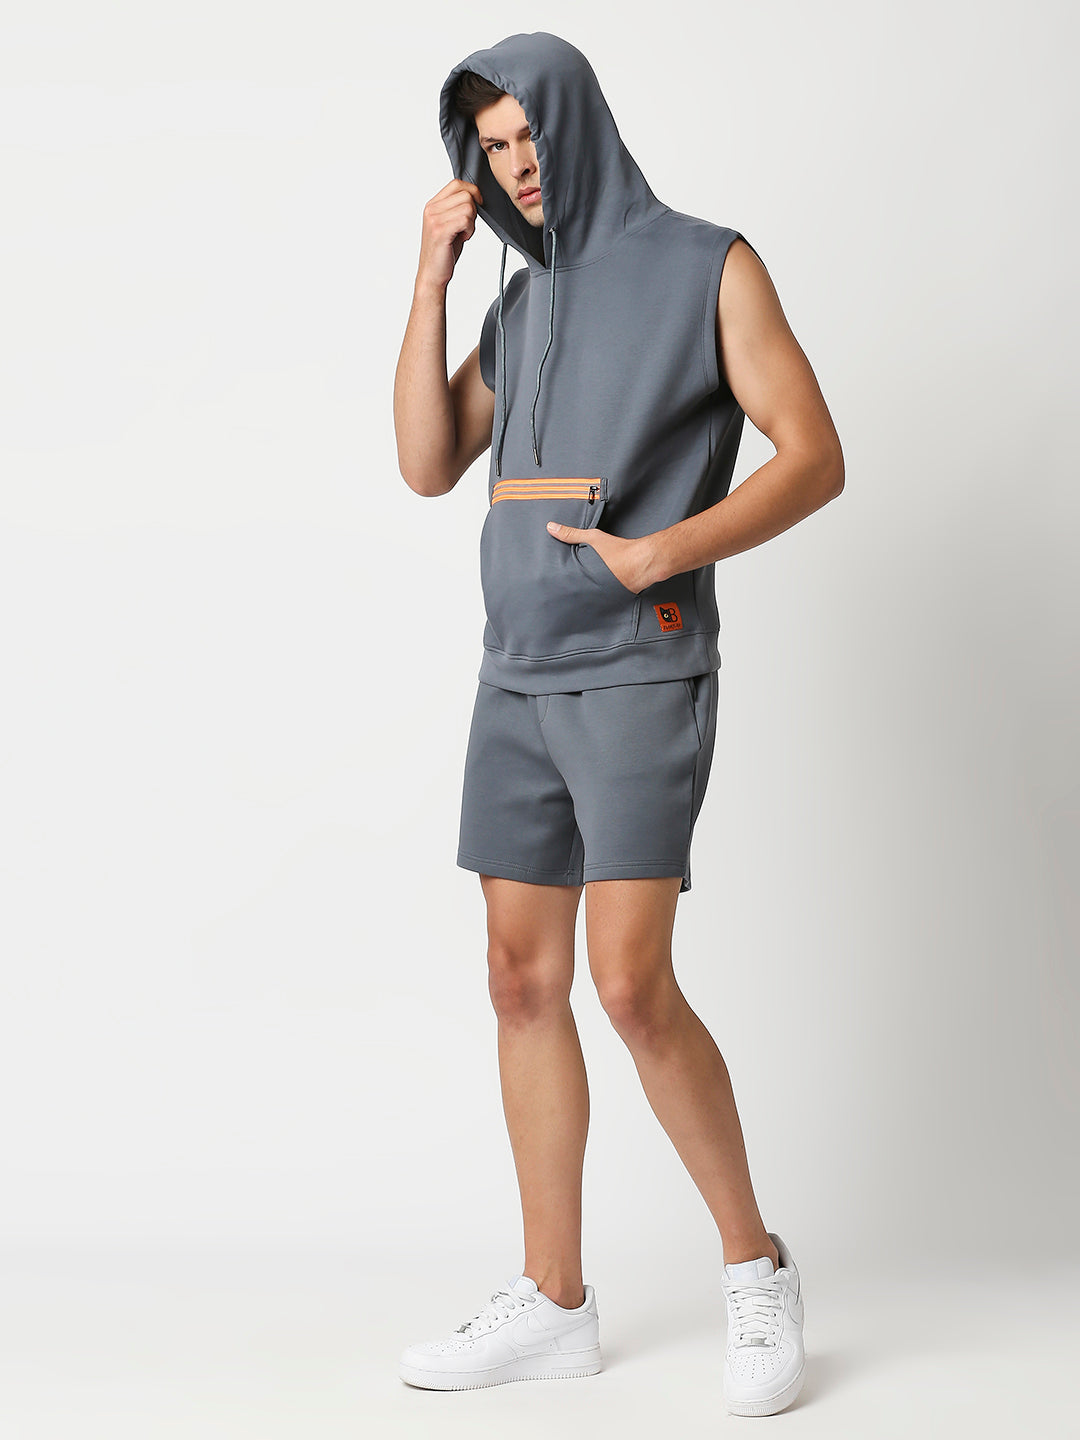 Buy Blamblack Men's Dark Grey Hoodie Vest & Short Set